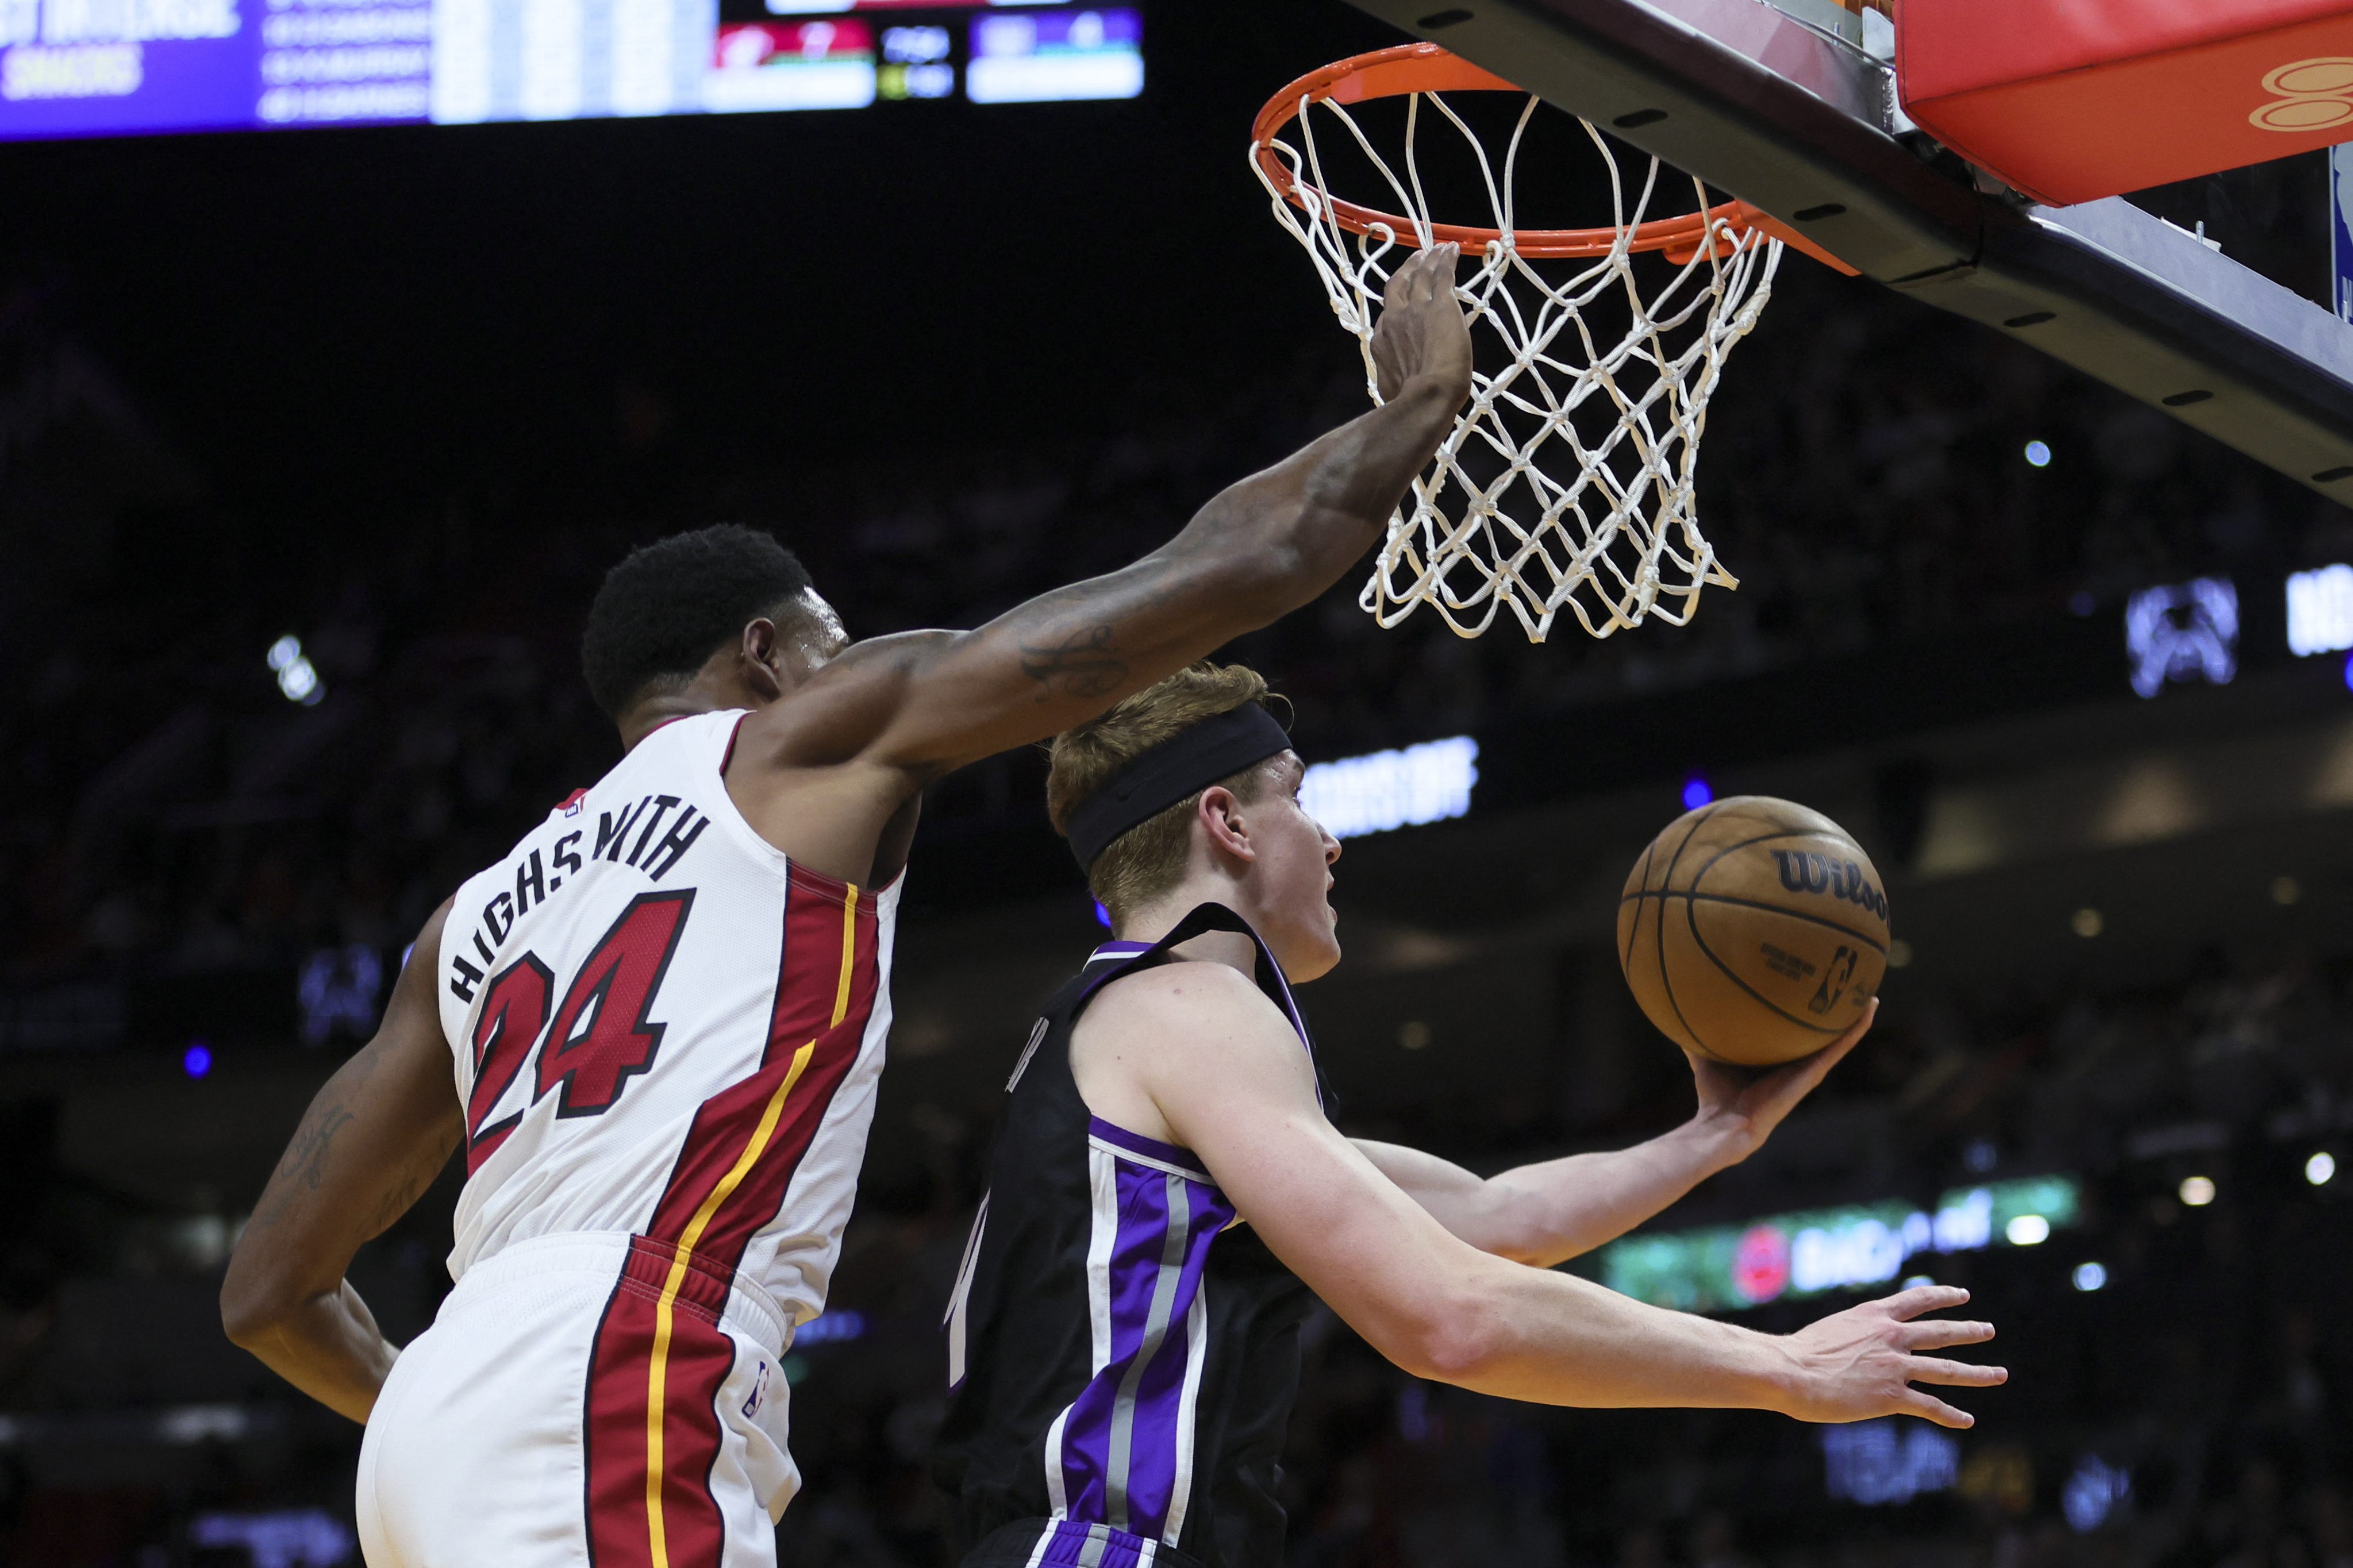 Miami Heat discuss winning ways in wake of losing streak